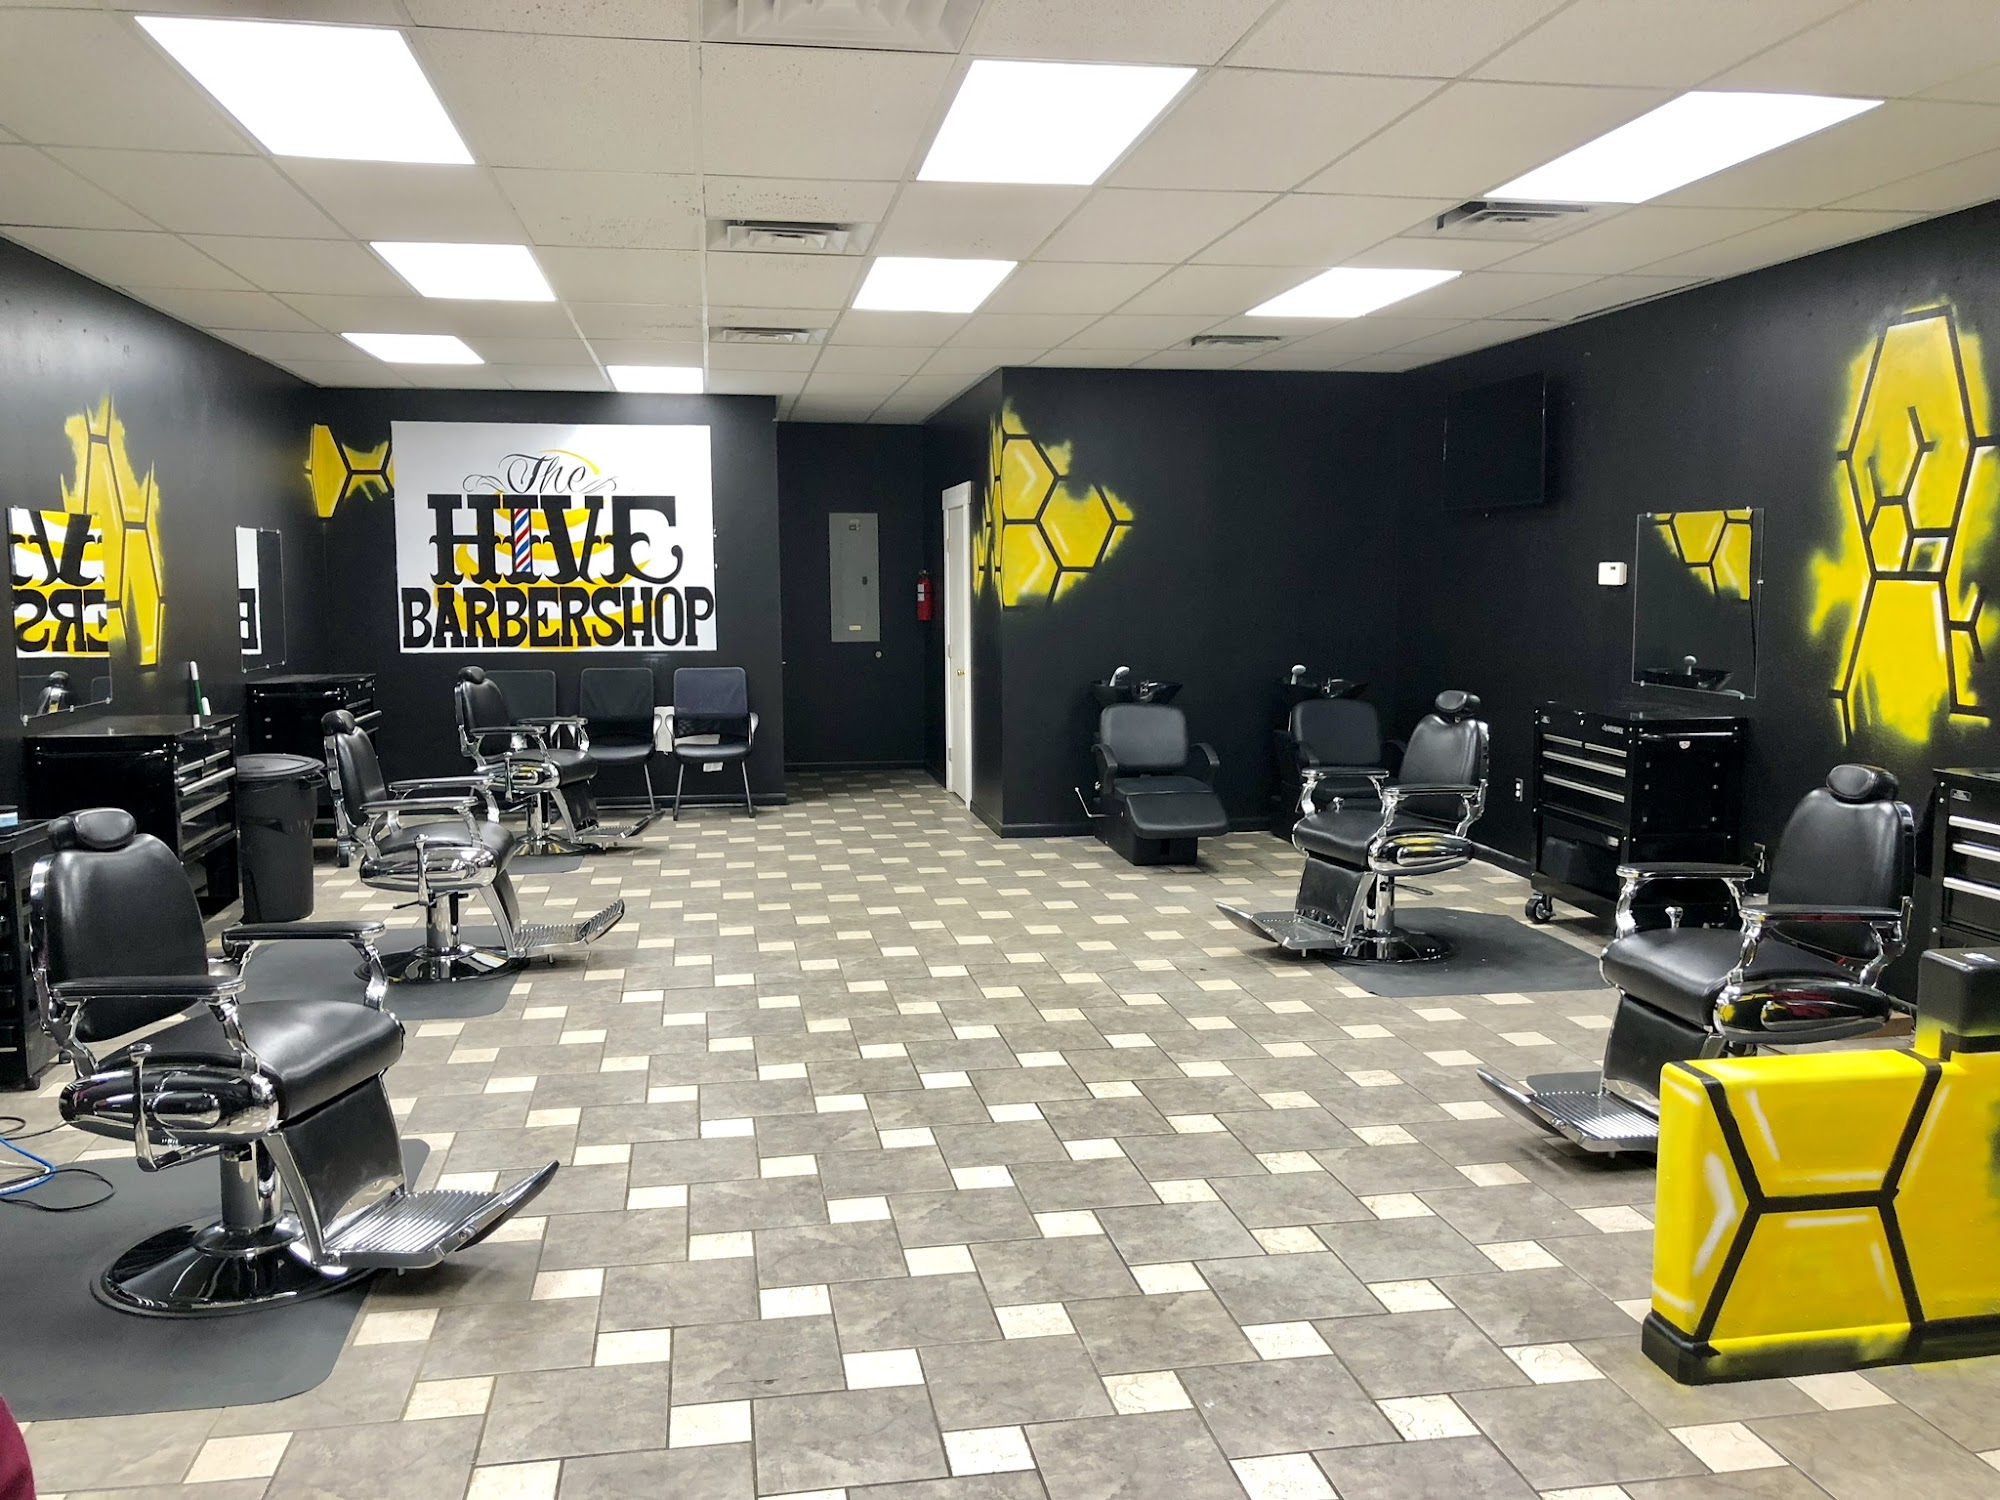 The Hive Barbershop